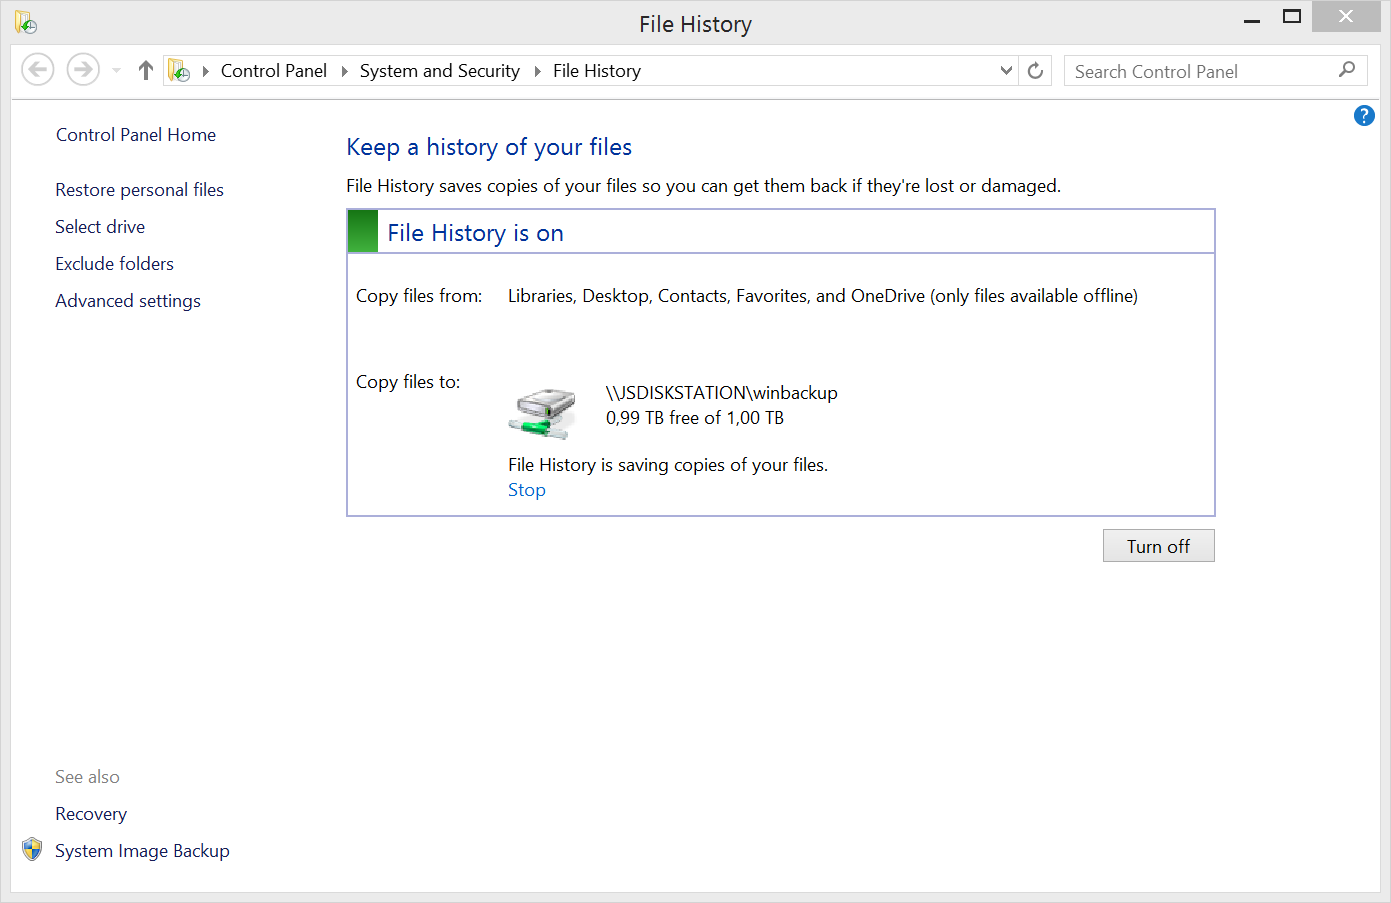 Setup file history backup to my disk station